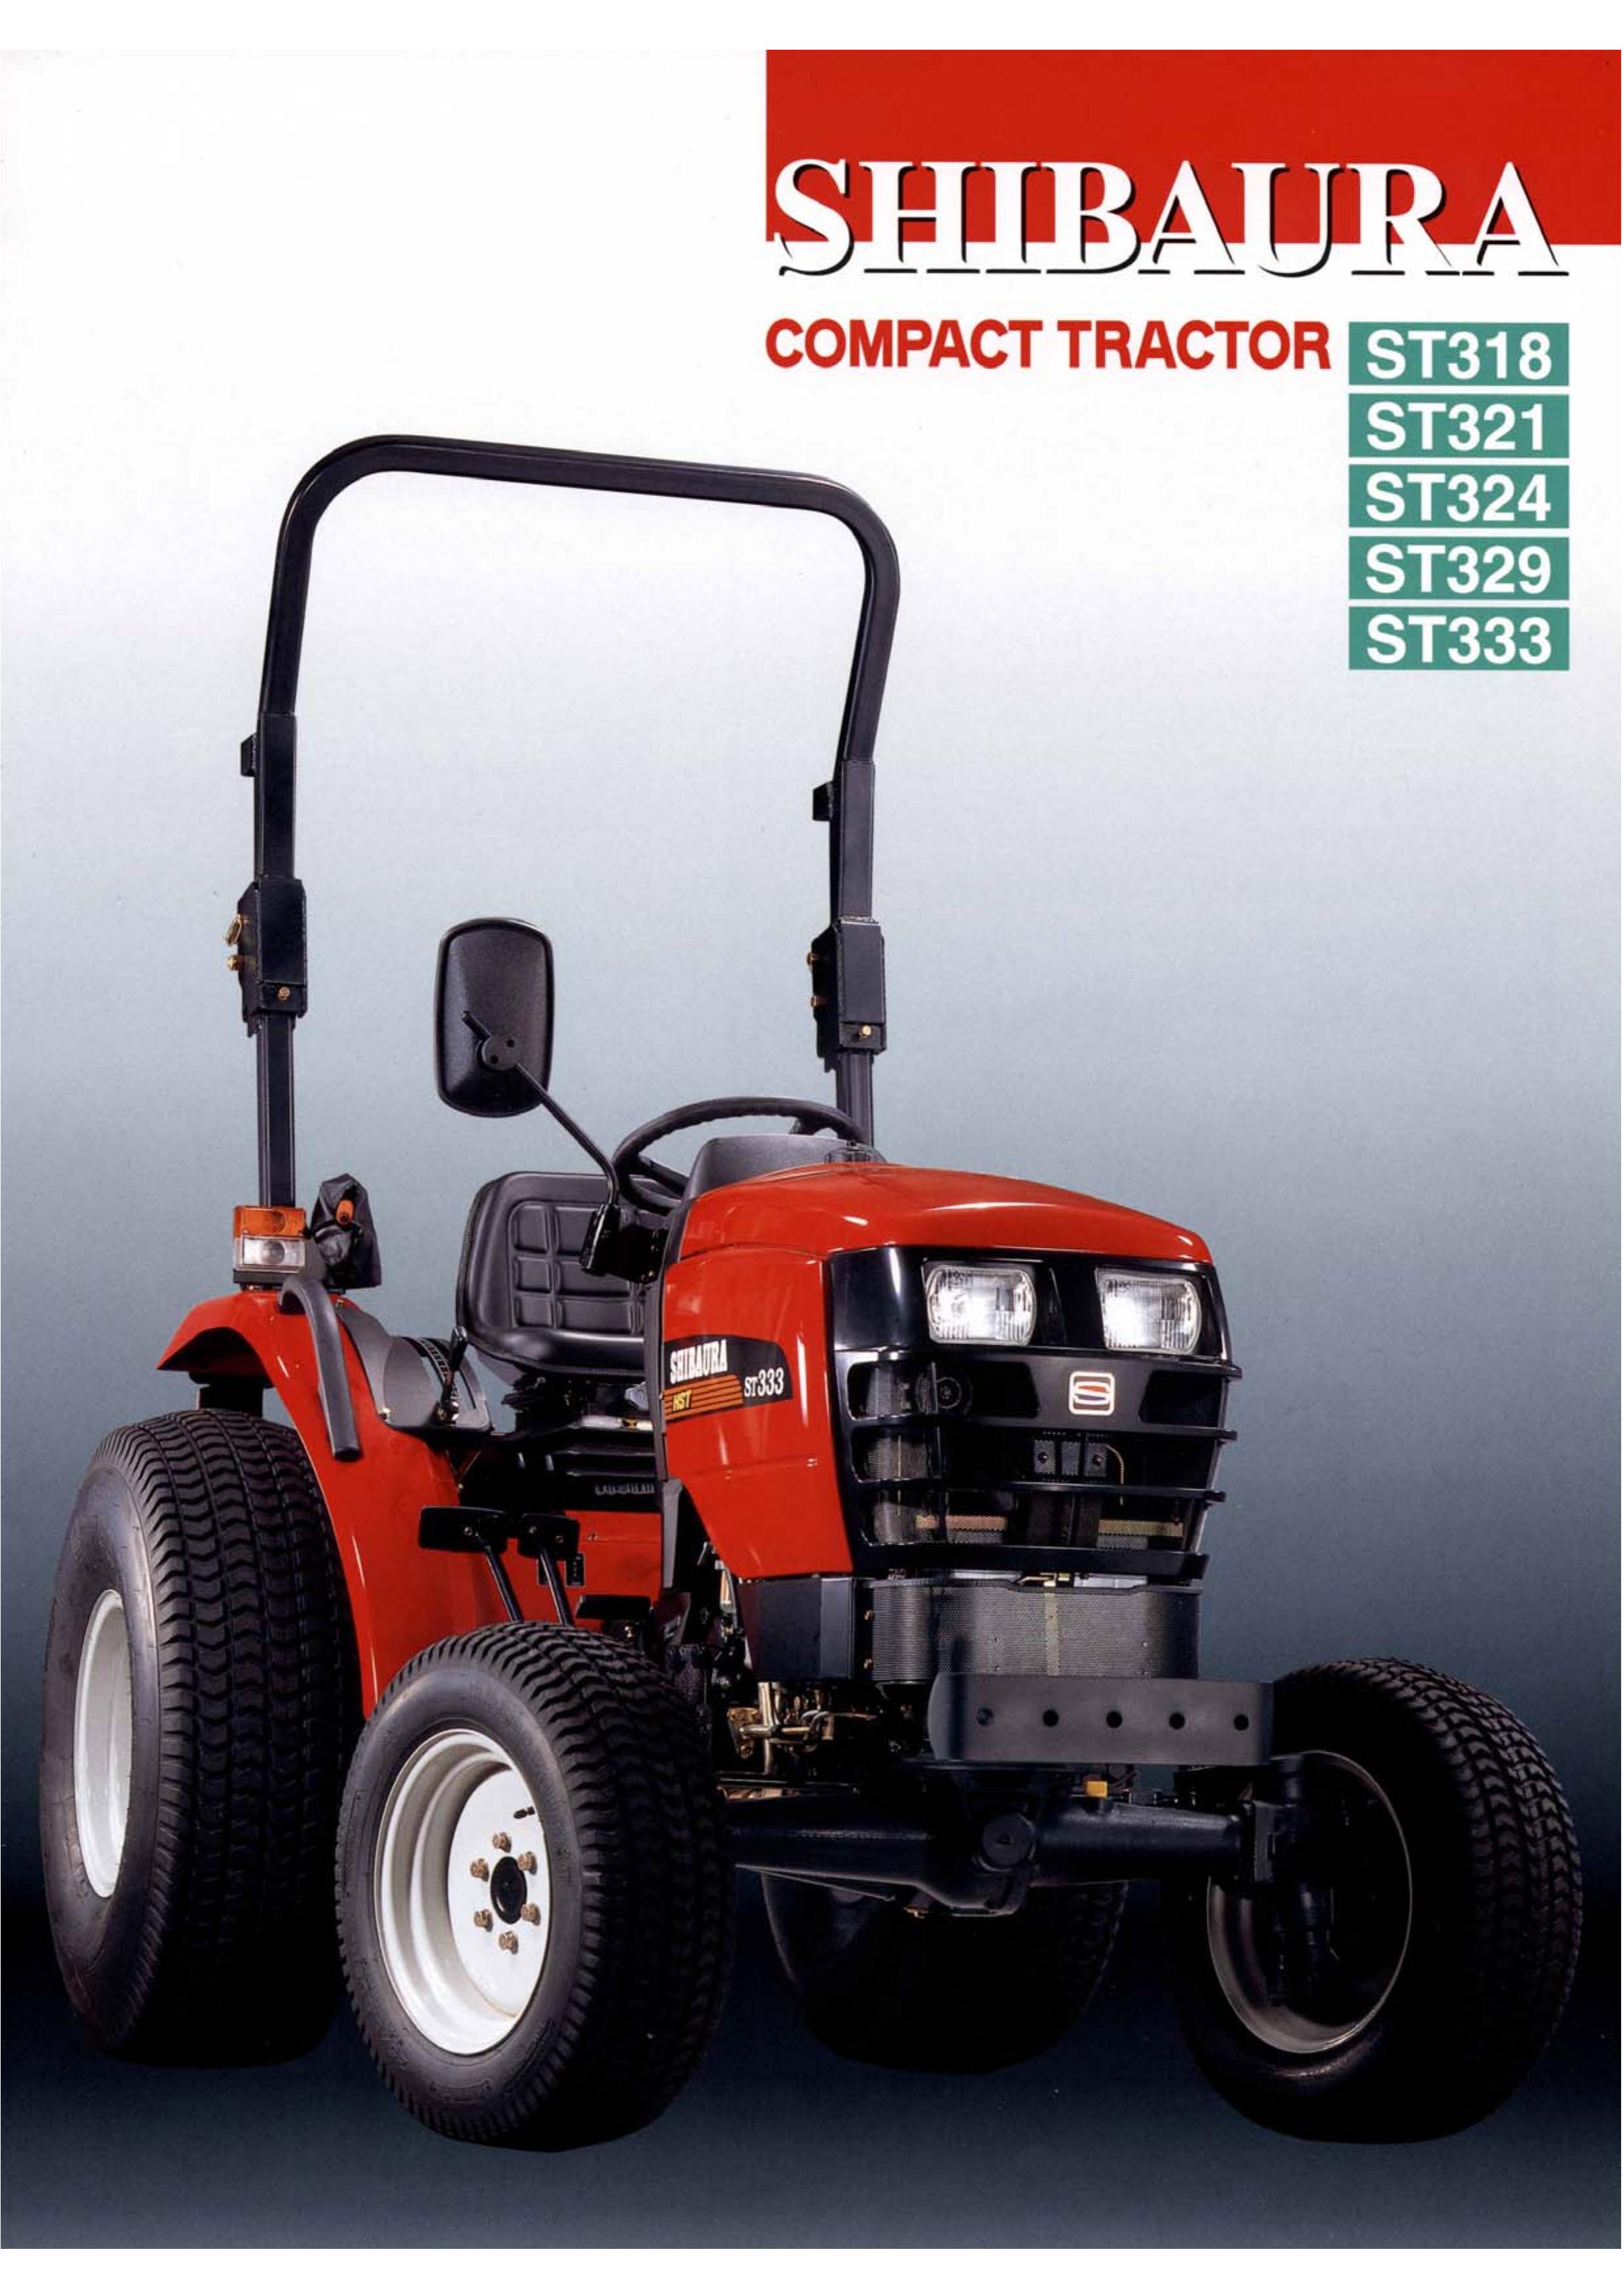 Shibaura ST333 Lawn Mower User Manual